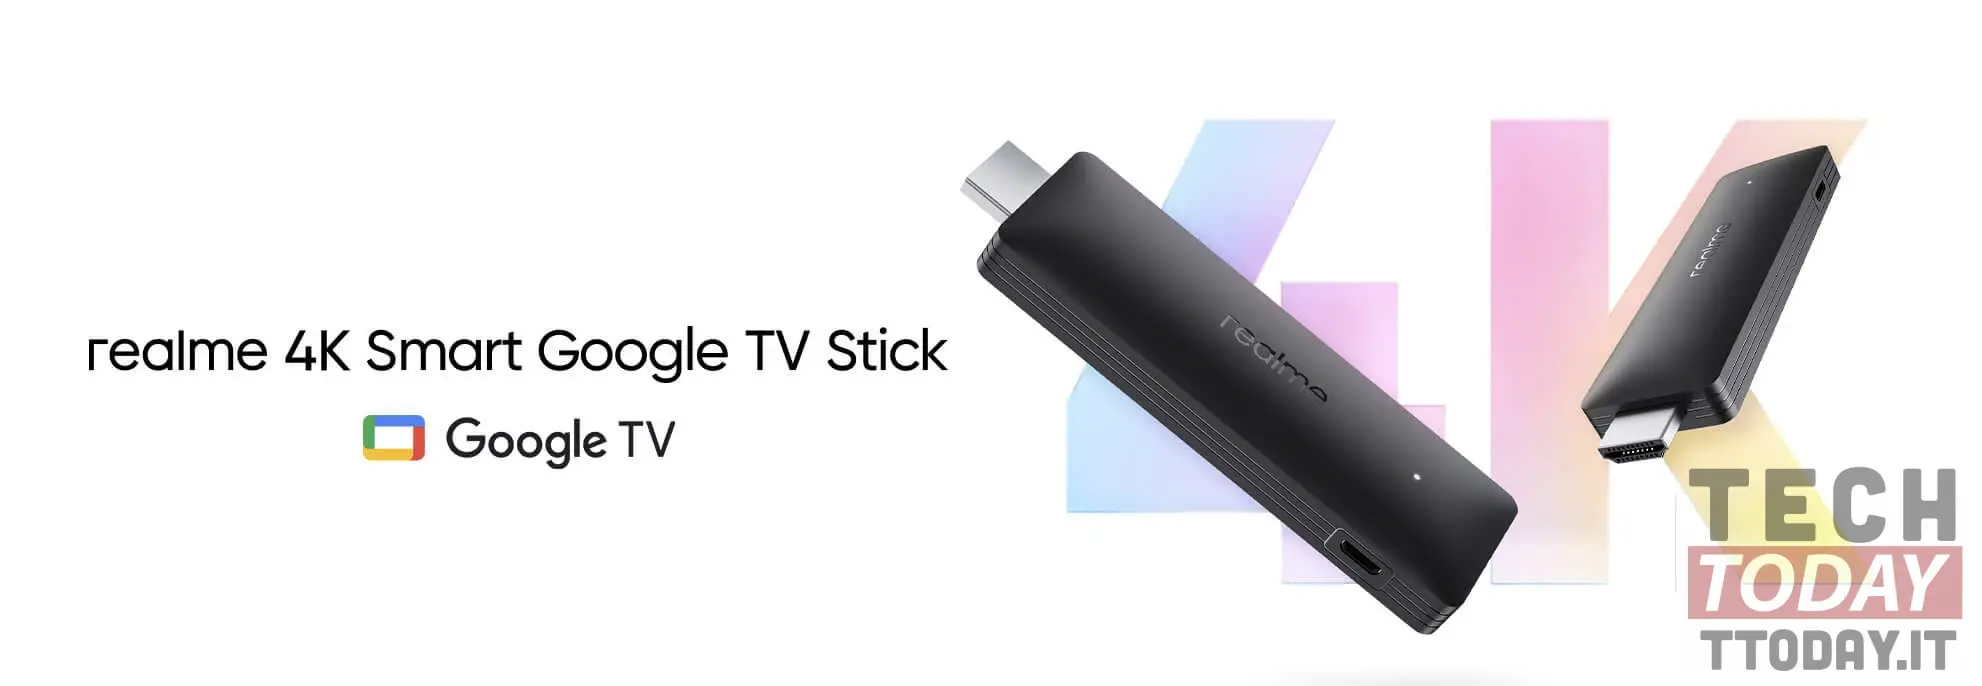 realme tv stick 4k will be the alternative to google chromecast